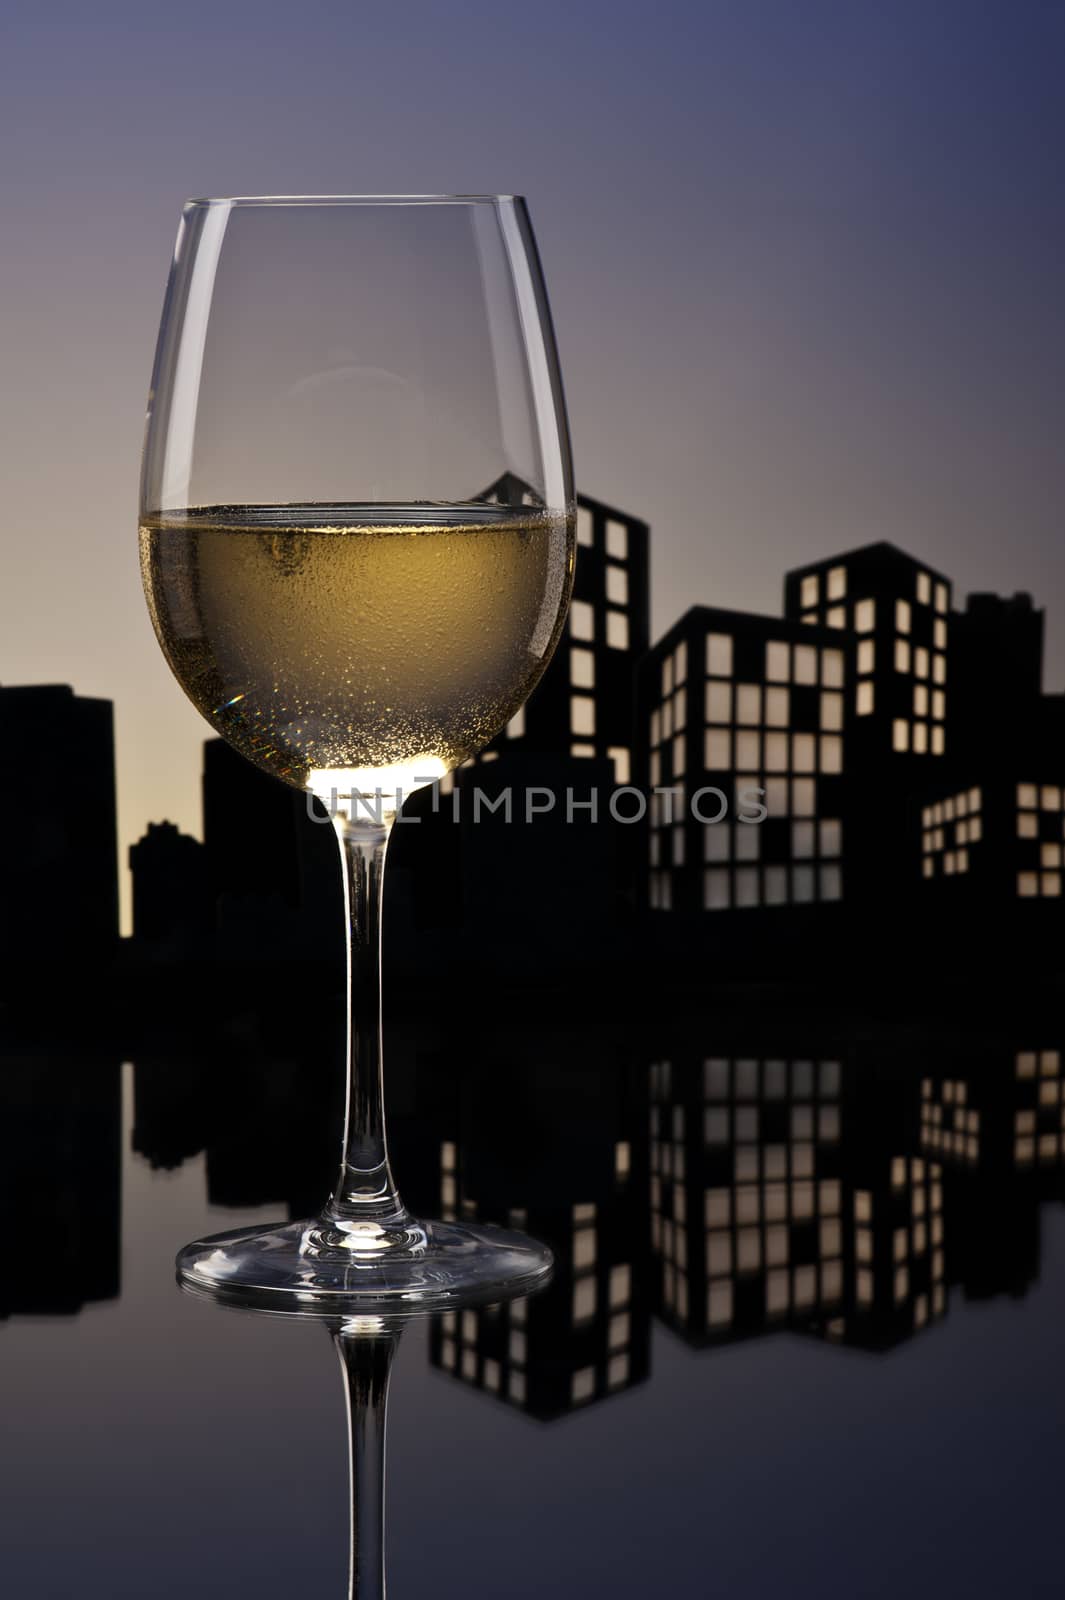 Metropolis White Wine in city skyline setting